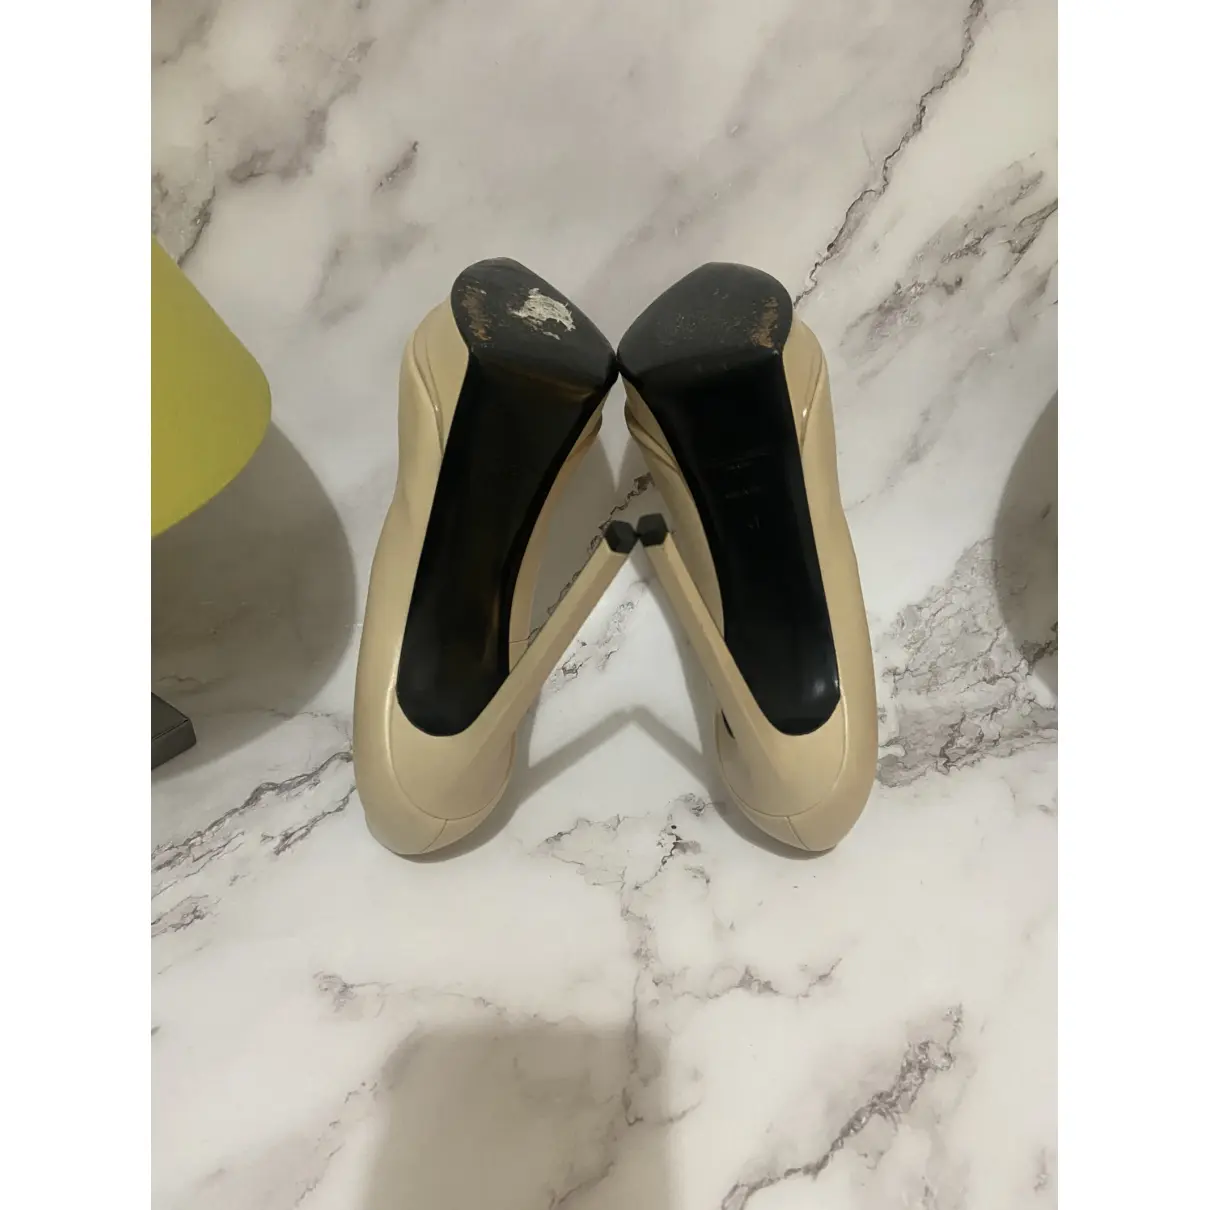 Janis leather heels Saint Laurent